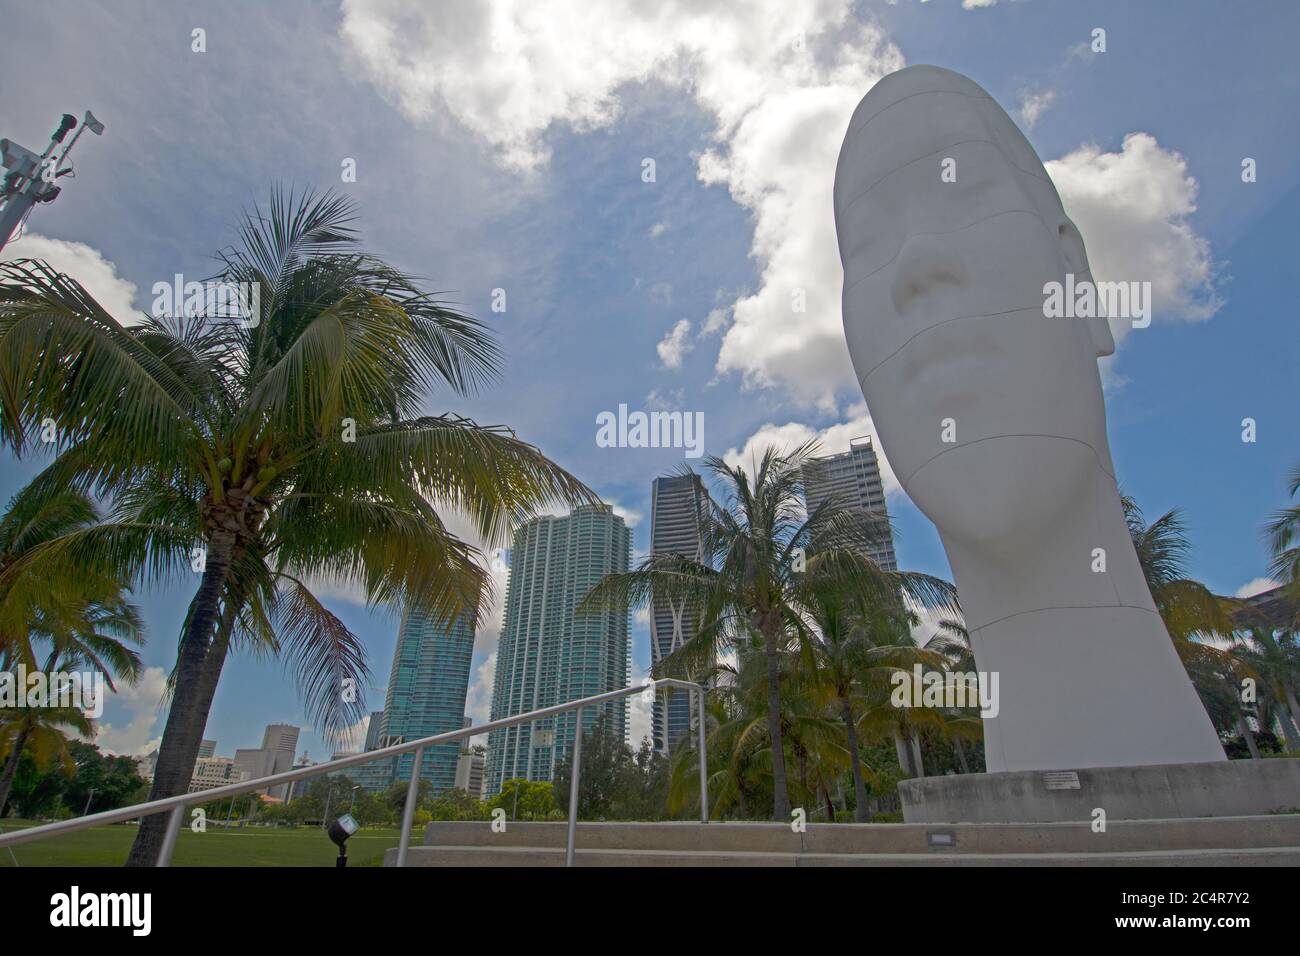 Looking into my dreams, Awilda, sculpture by Spanish artist Jaume Plensa, Perez Art Museum Miami, Downtown Miami, Florida, USA Stock Photo